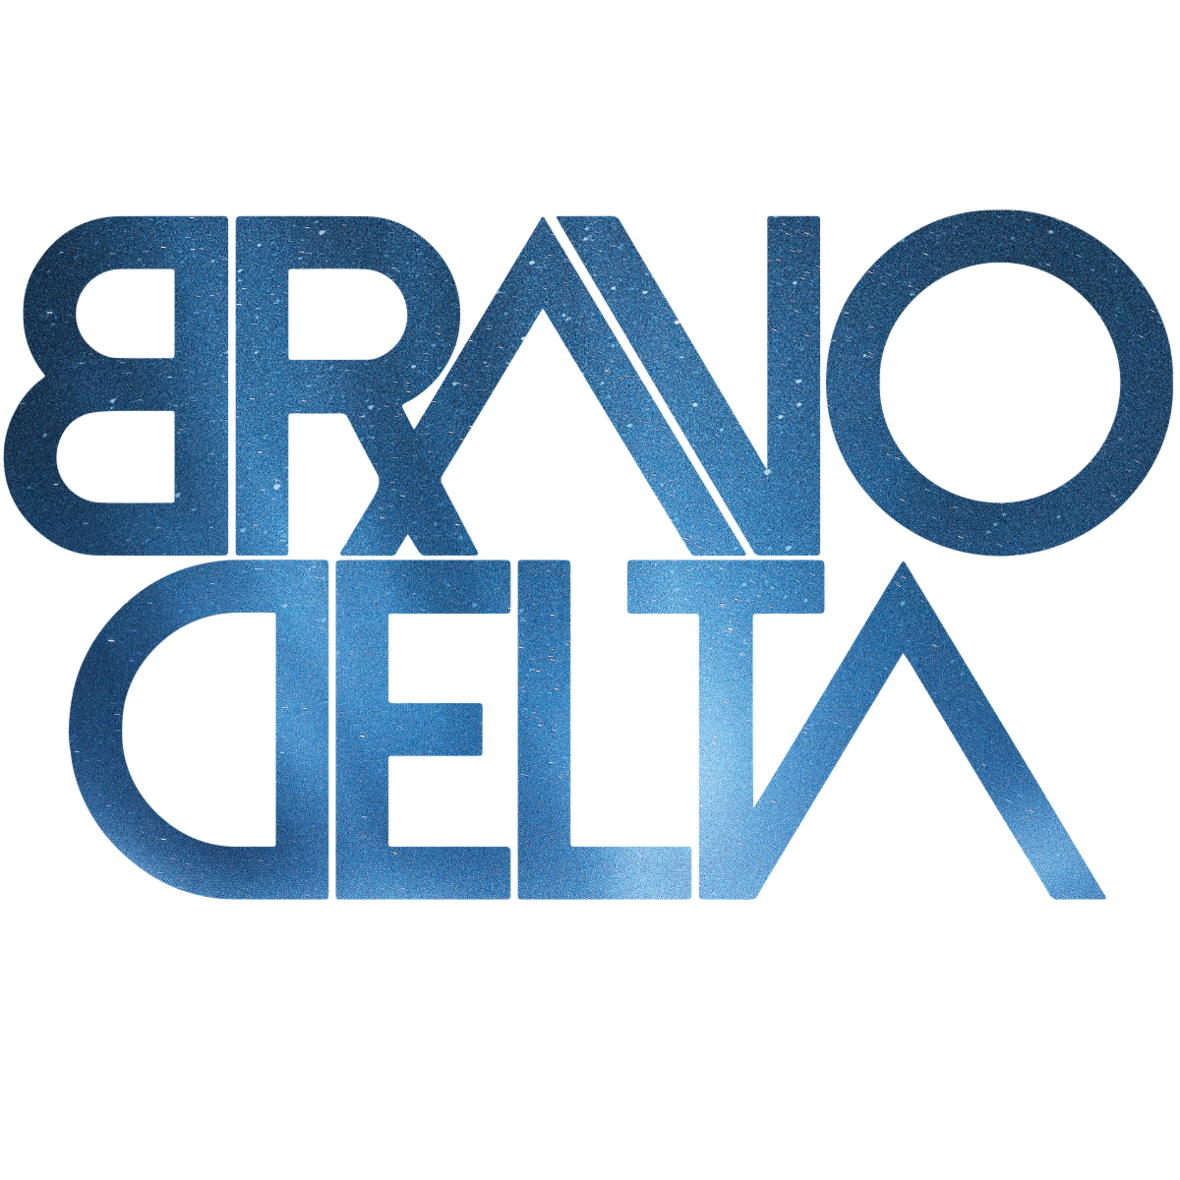 bd-logo-new